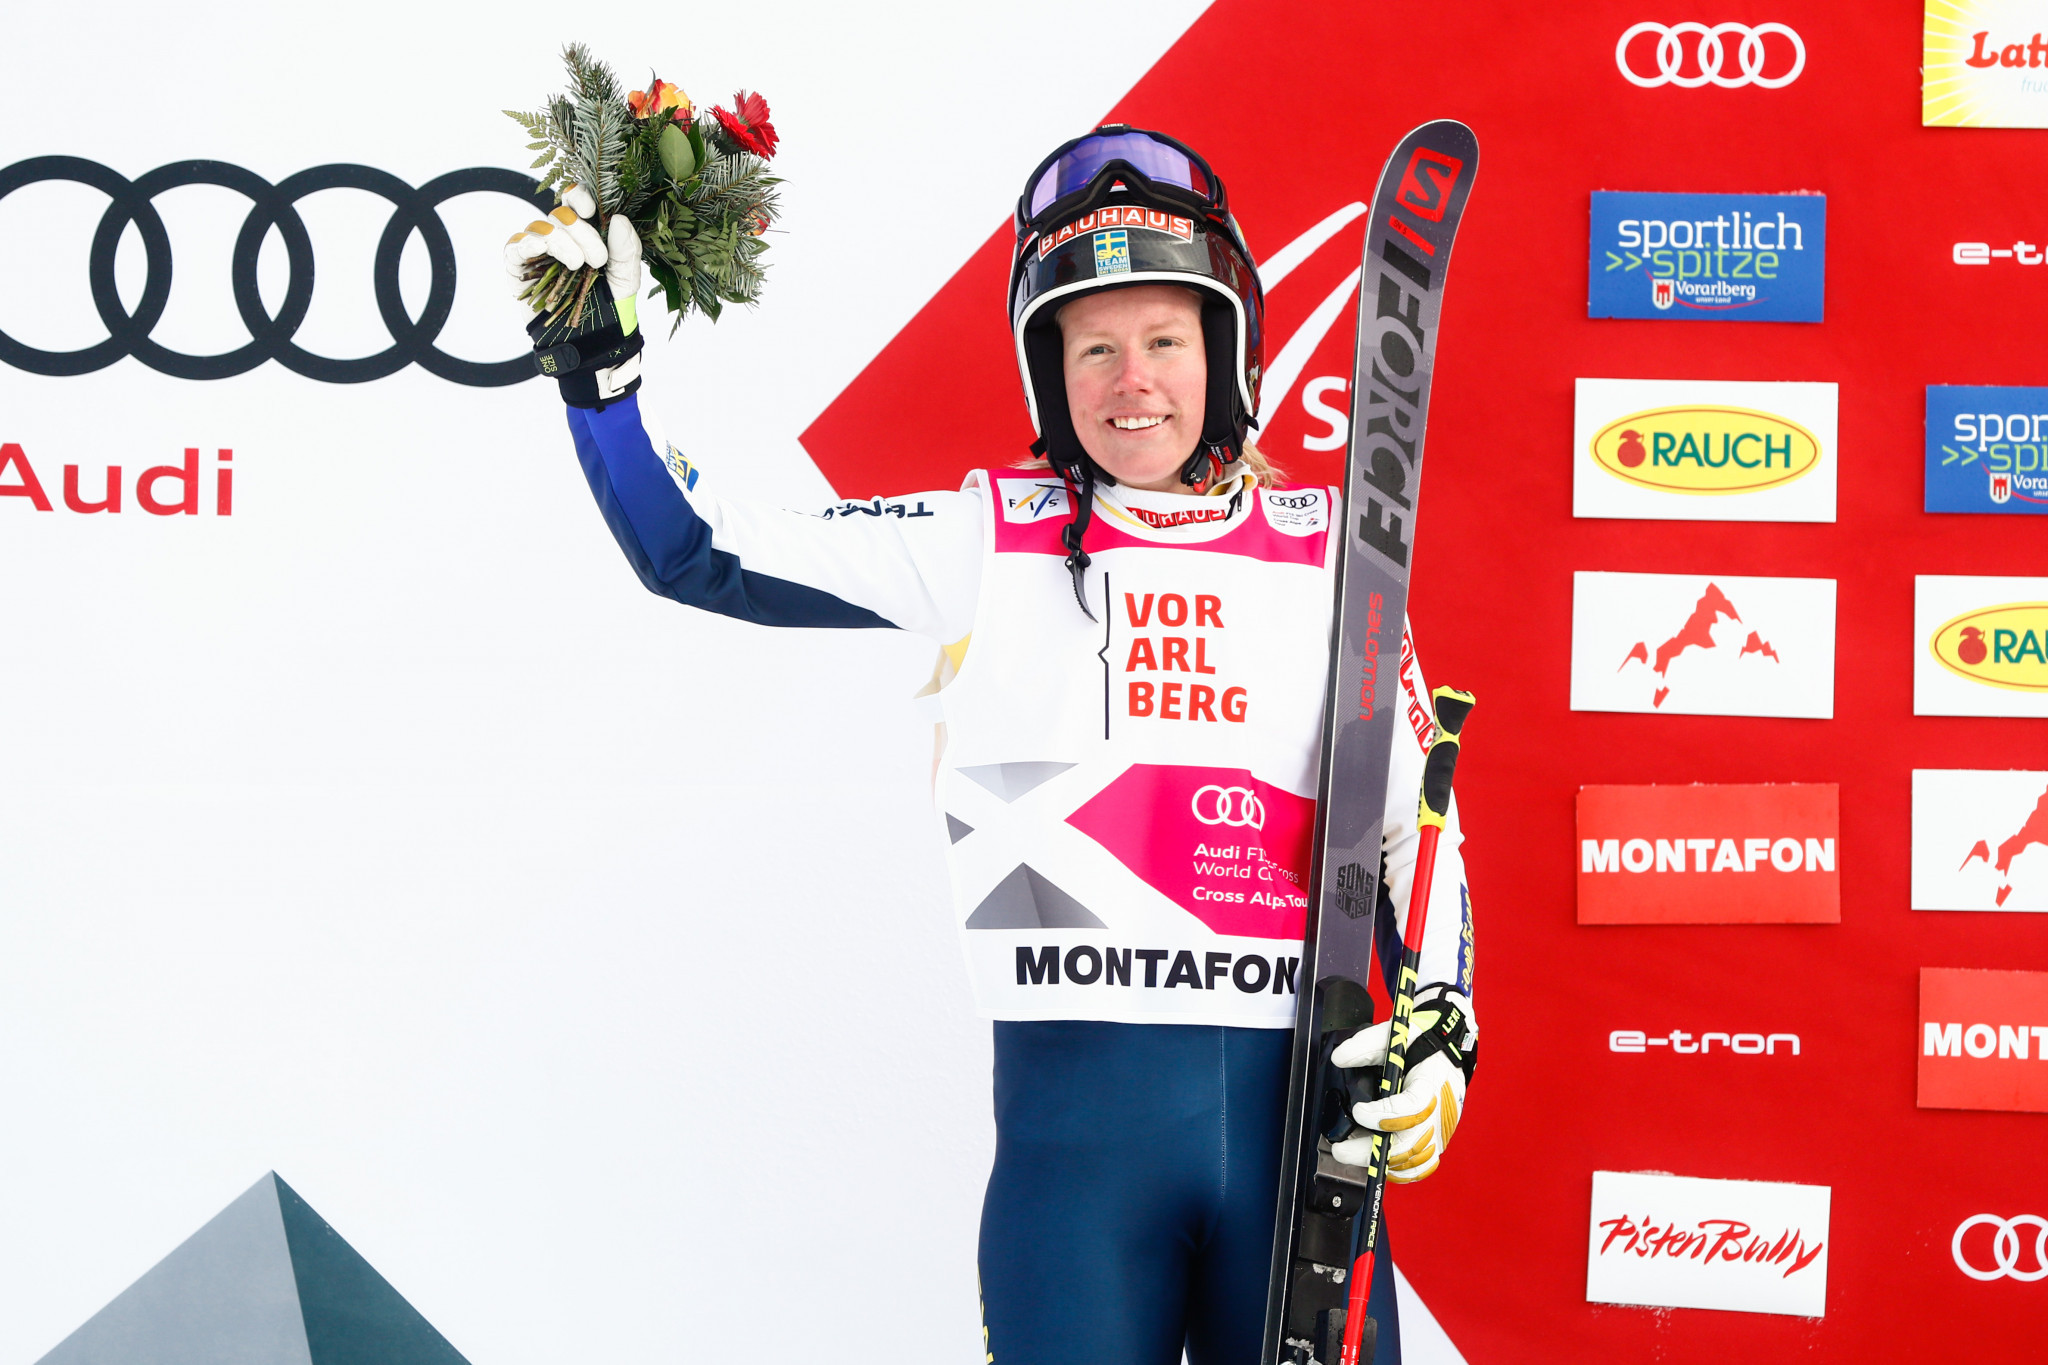 Näslund dominates qualification at home FIS Ski Cross World Cup in Idre Fjäll